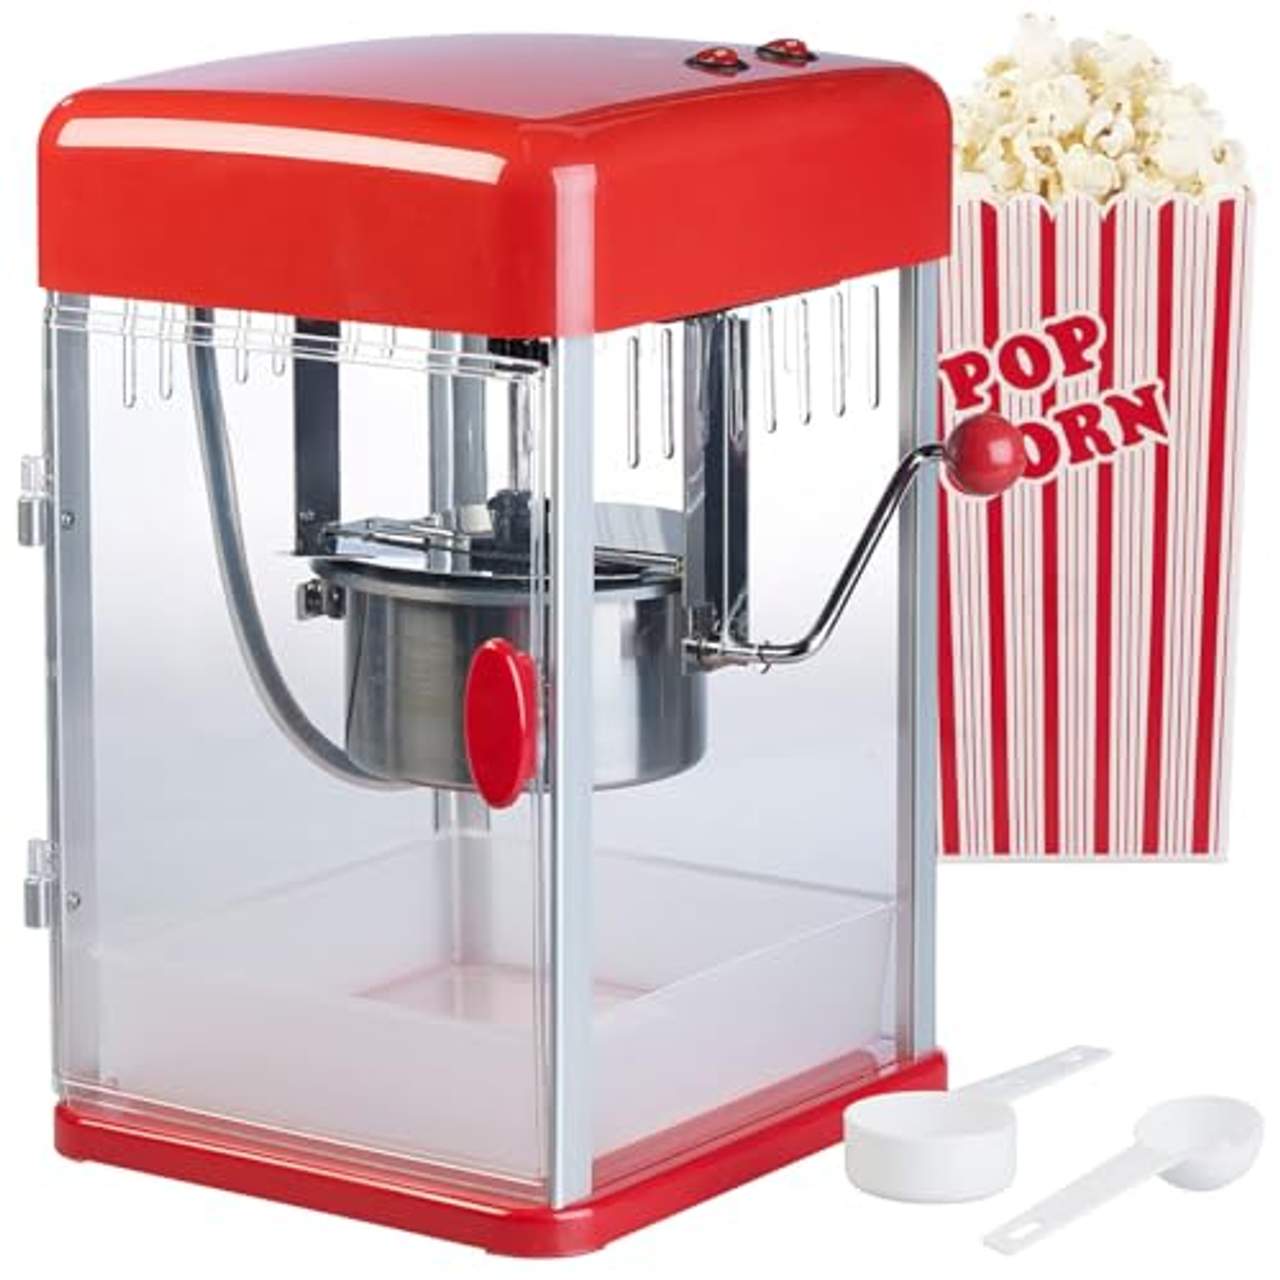 Rosenstein & Söhne Popcornmaschine: Profi-Retro-Popcorn-Maschine"Cinema"